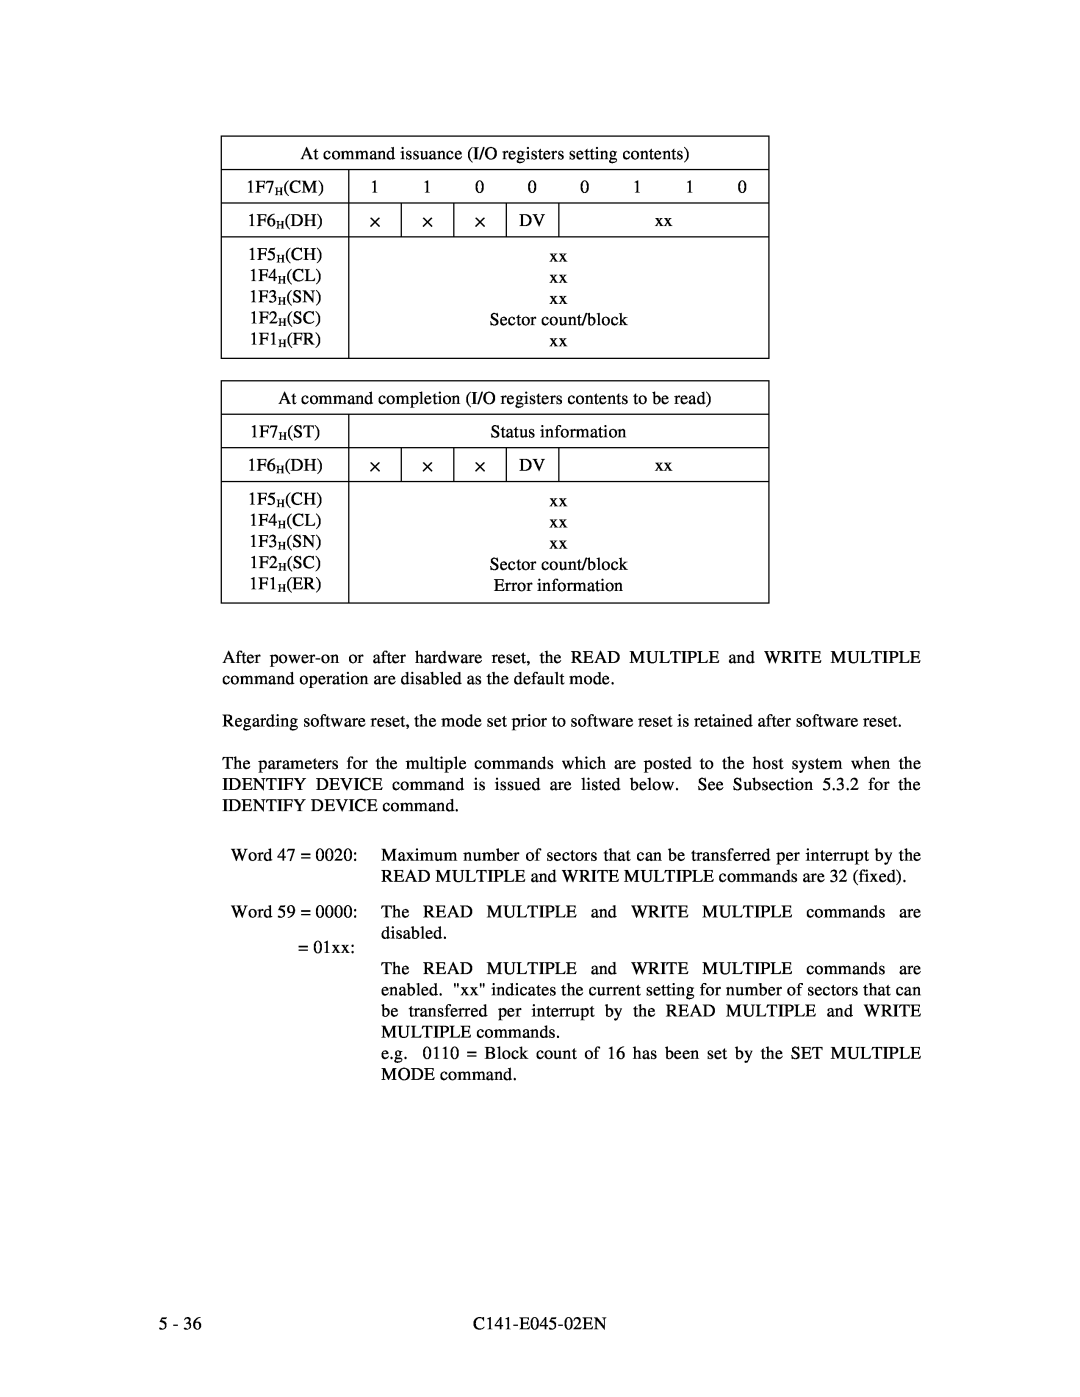 Fujitsu MPB3032AT manual At command issuance I/O registers setting contents, 1F7HCM, 1F6HDH, 1F5HCH, 1F4HCL, 1F3HSN, 1F2HSC 